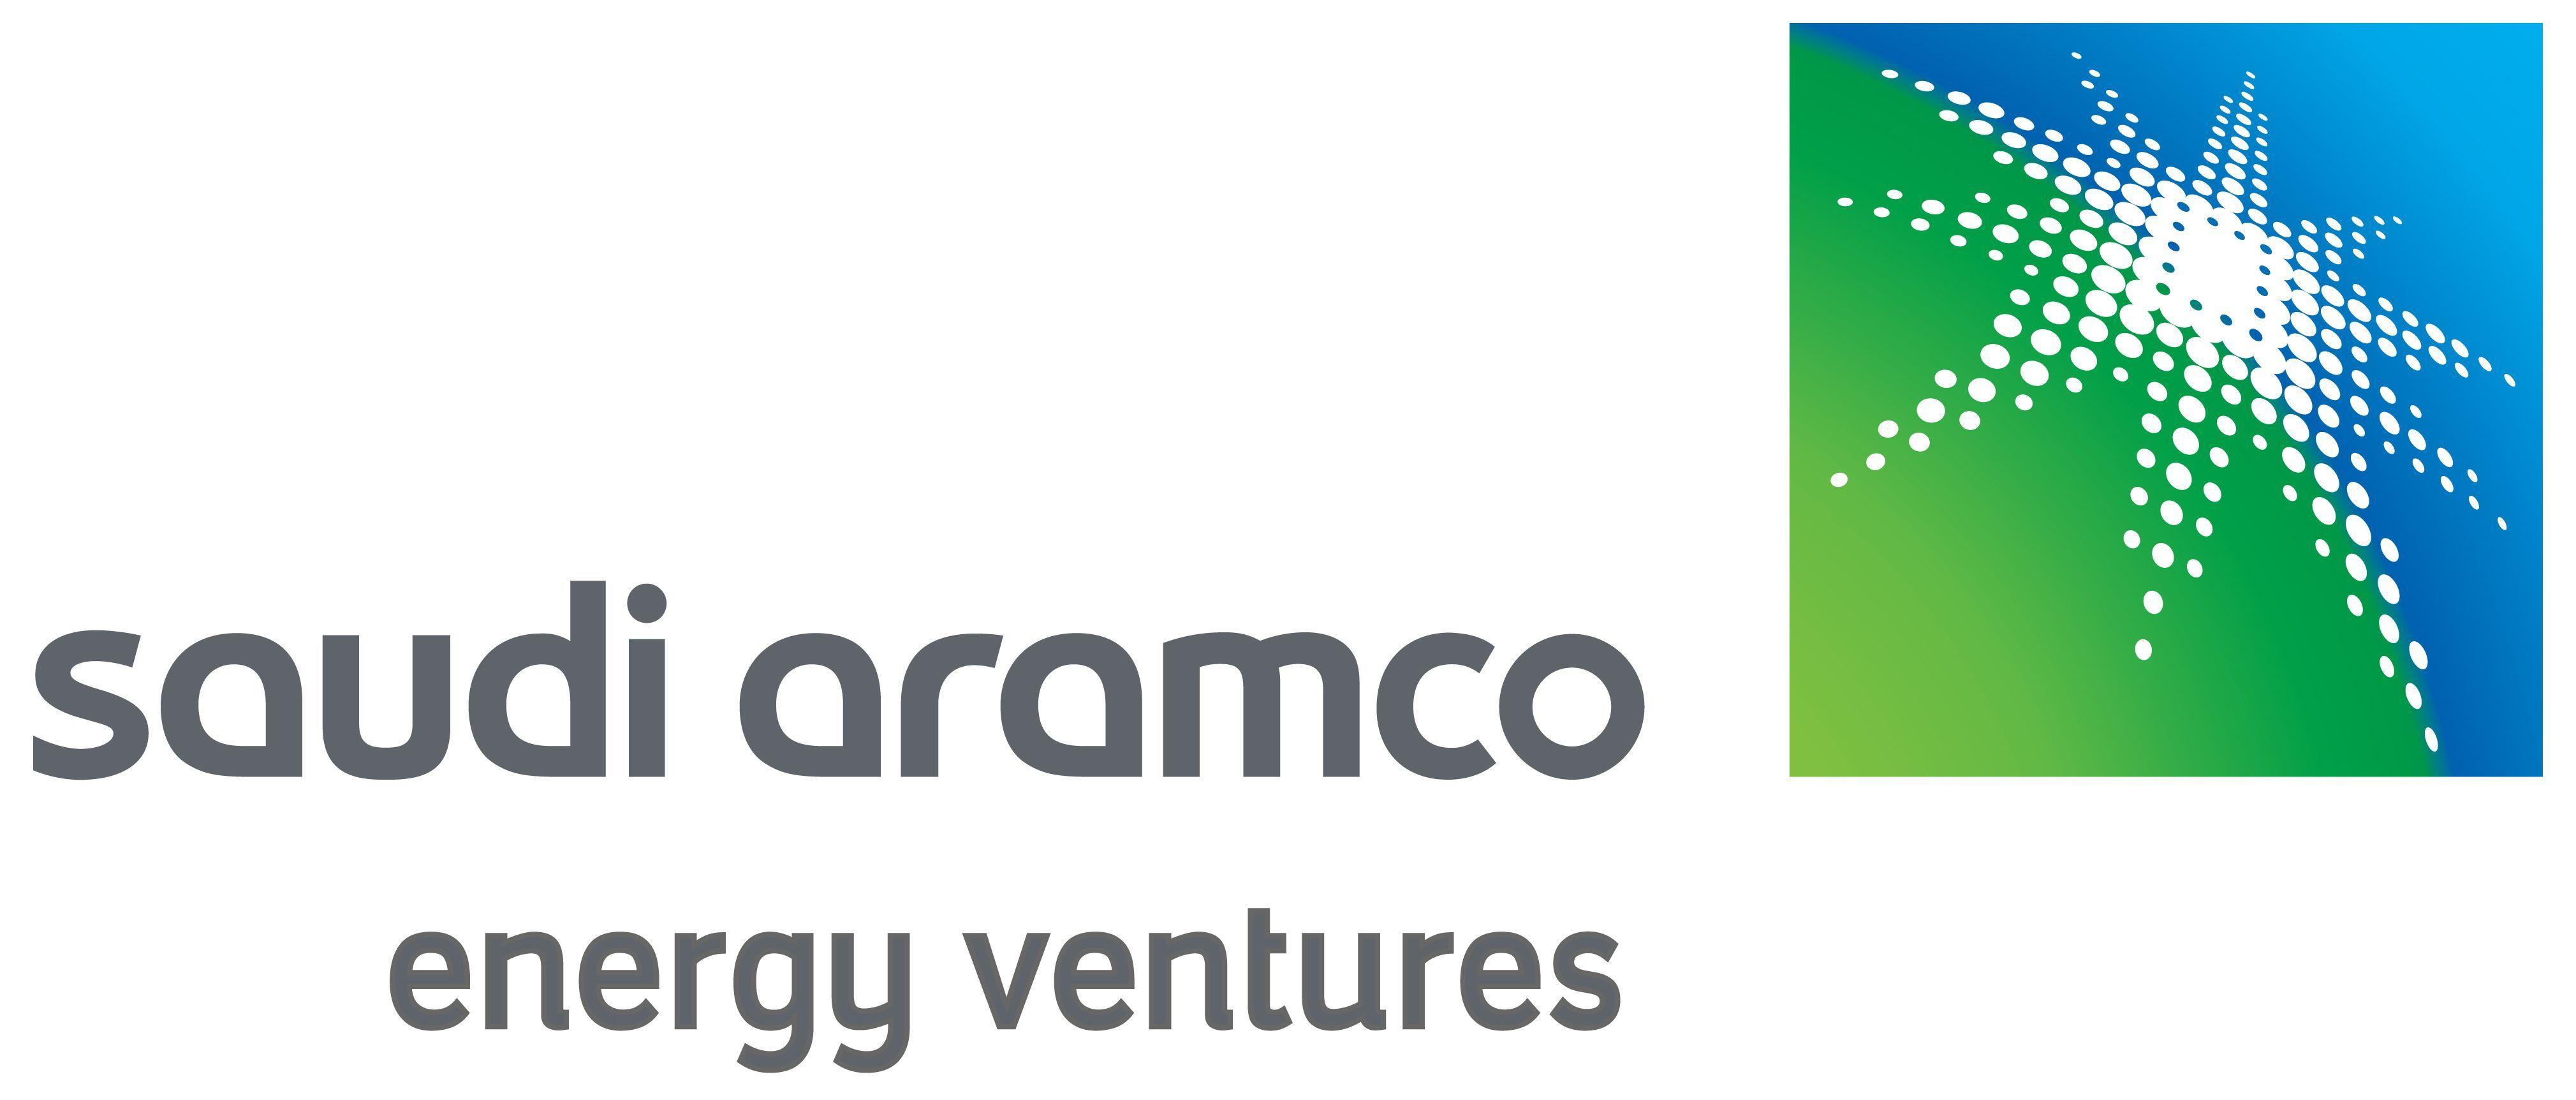 Aramco Logo - Saudi Aramco energy venture - PROPEL Energy Tech Forum